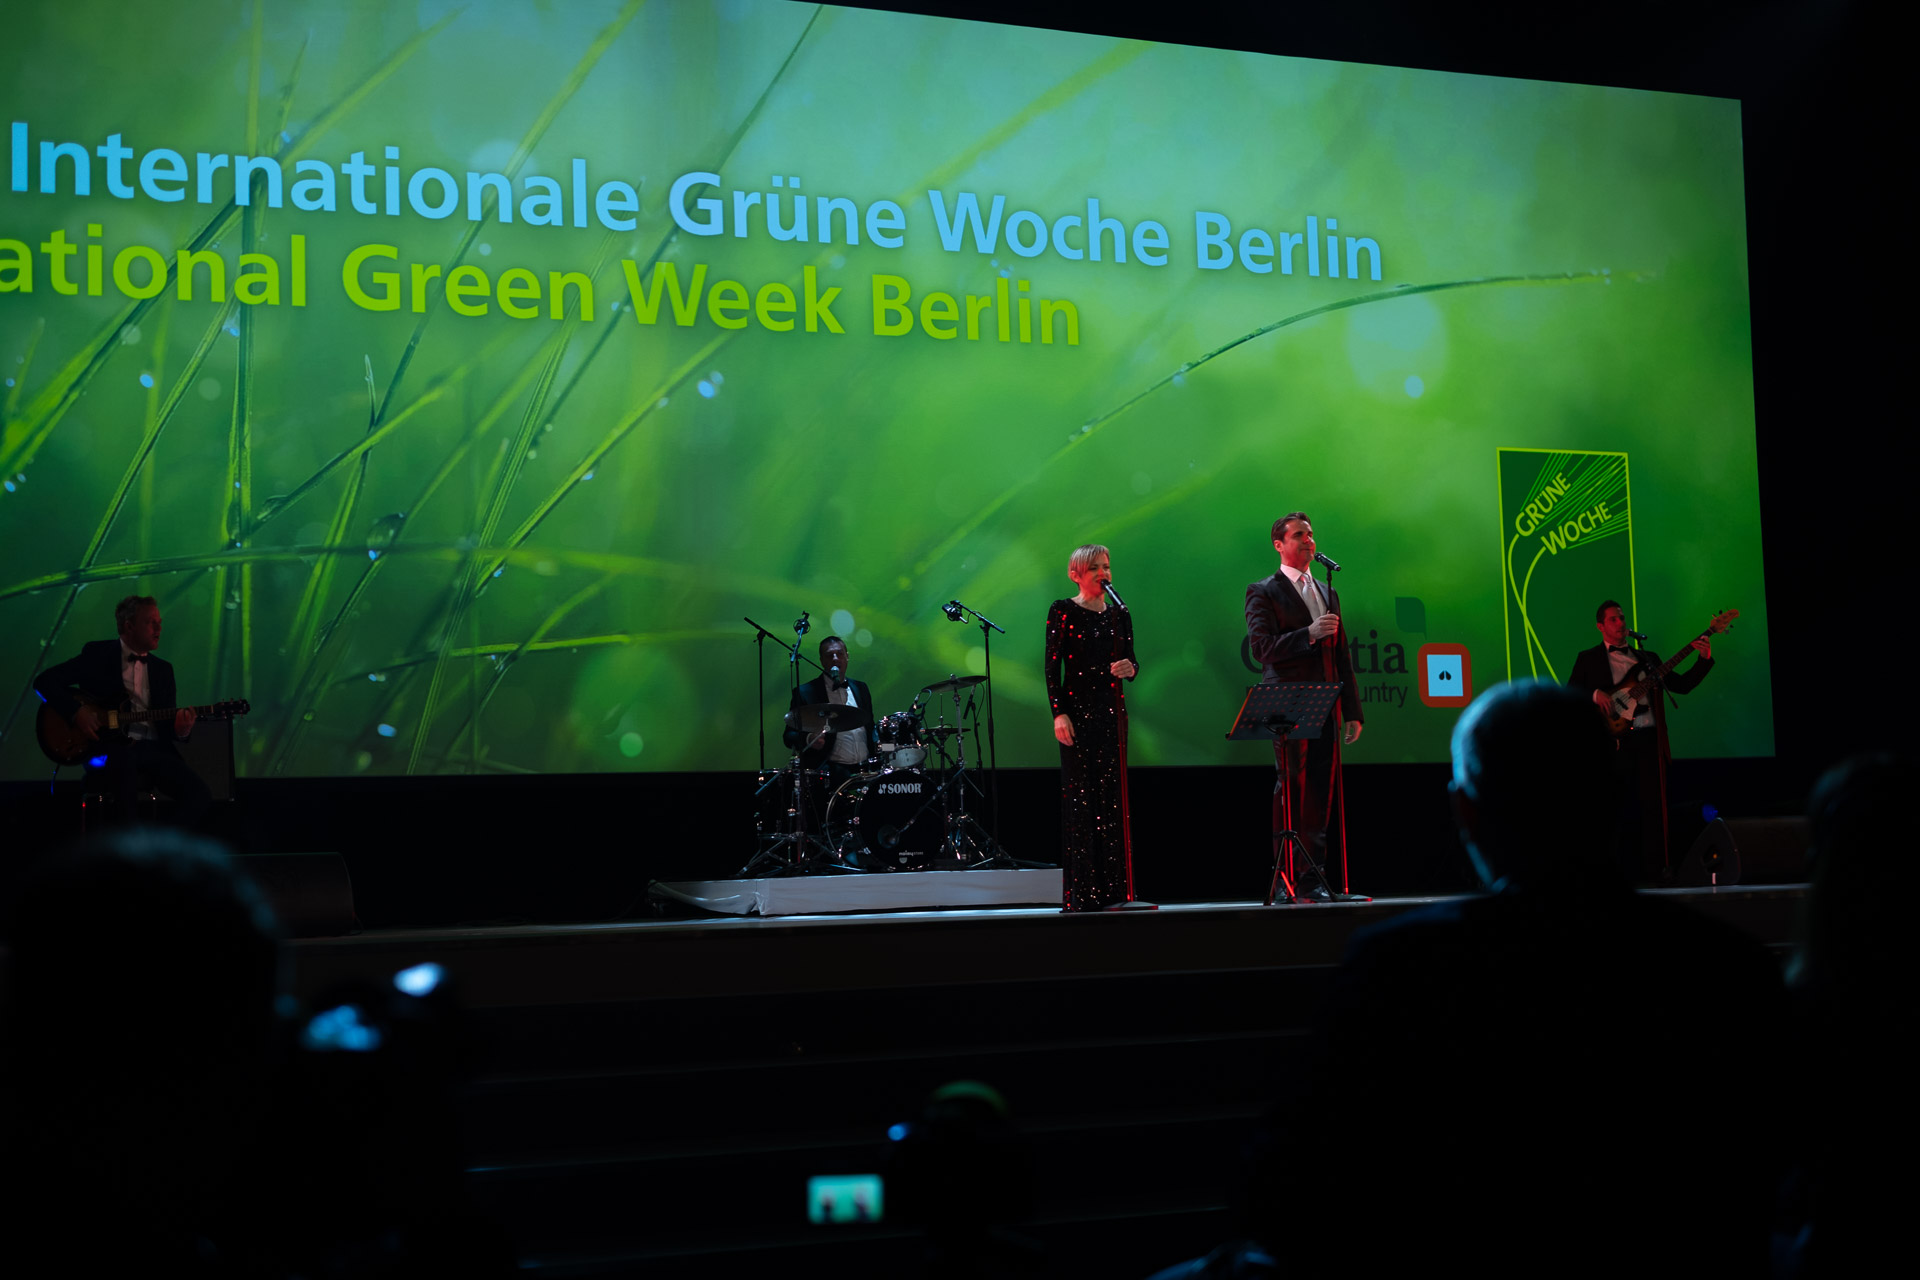 85. Međunarodni Zeleni tjedan (Internationale Grüne Woche), Berlin 2020.